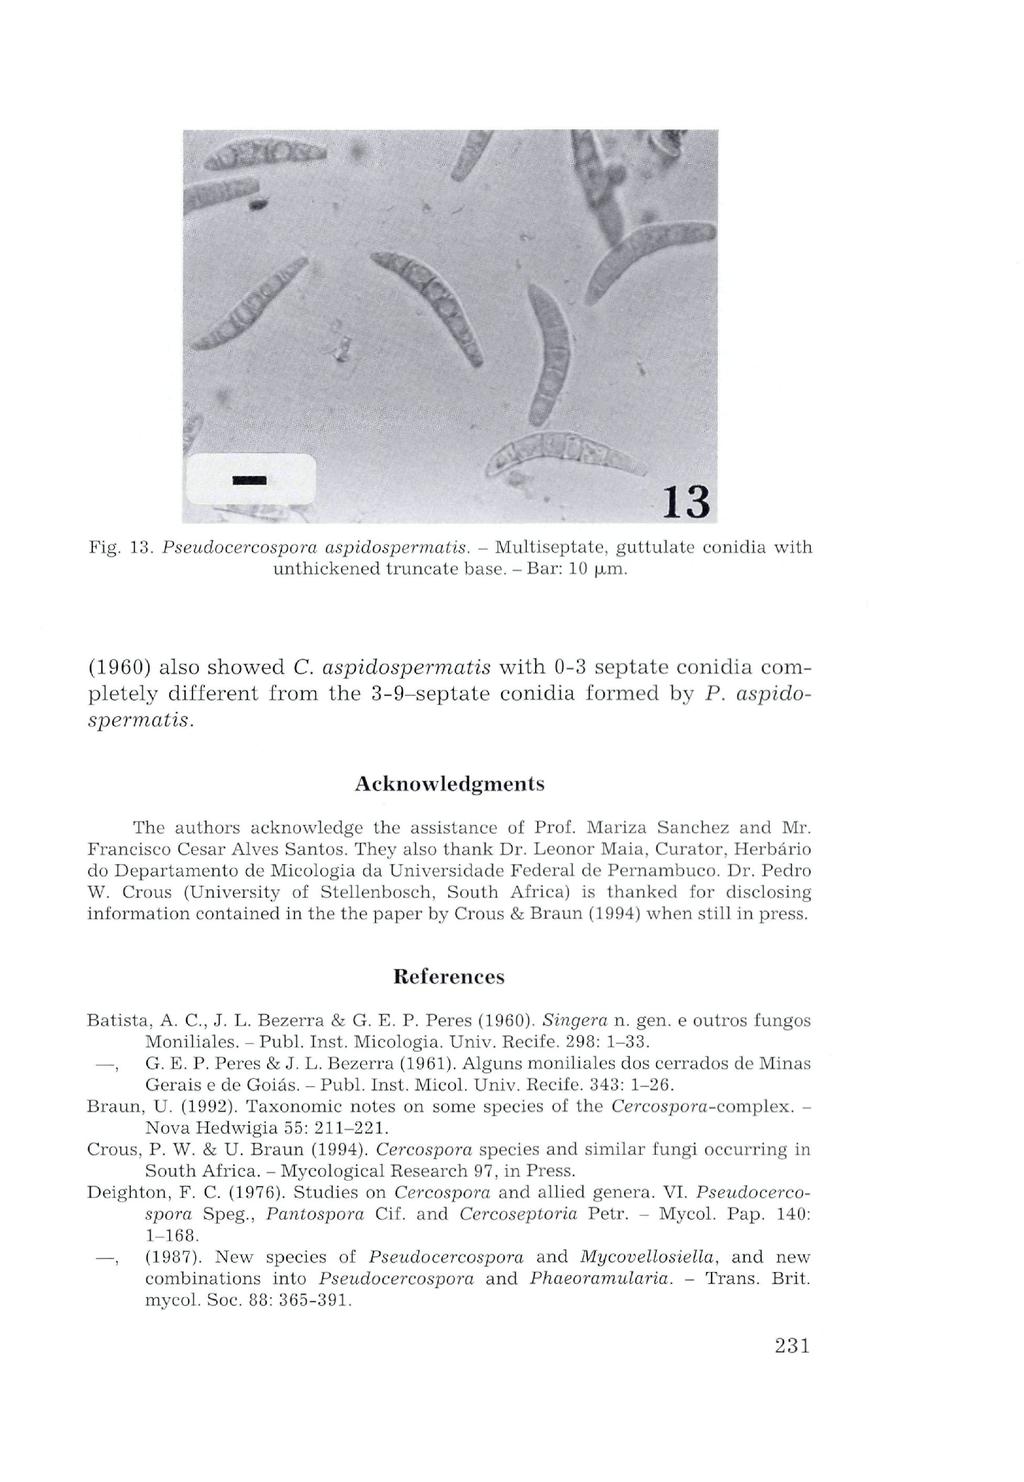 Fig. 13. Pseudocercospora aspidospermatis. - Multiseptate, guttulate conidia with unthickened truncate base. - Bar: 10 u-m. (1960) also showed C.